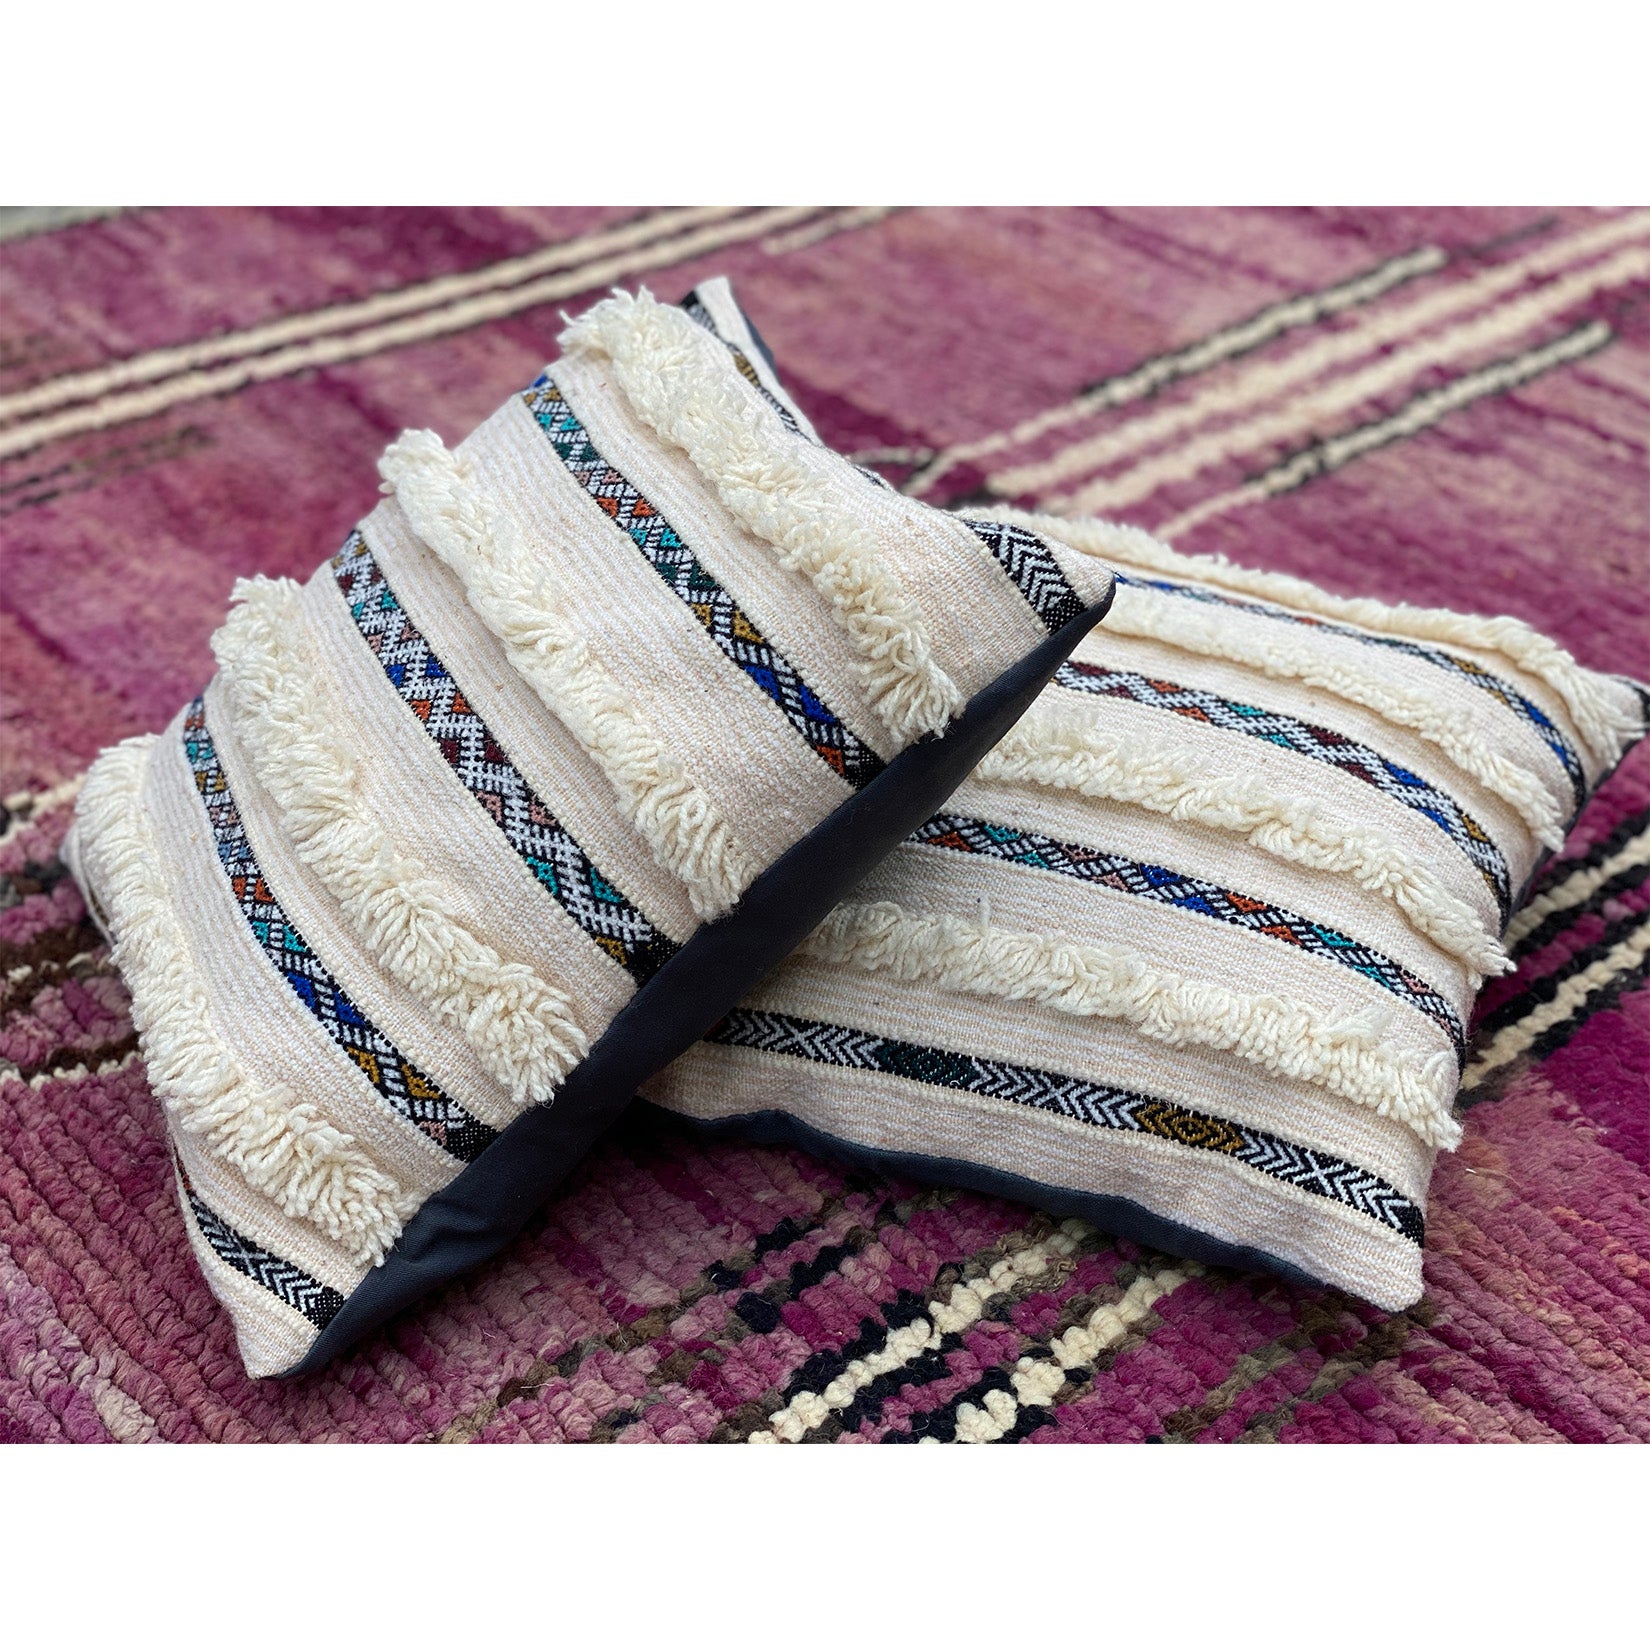 Stack of two modern wedding blanket pillows from Kantara, inspired by handira rugs